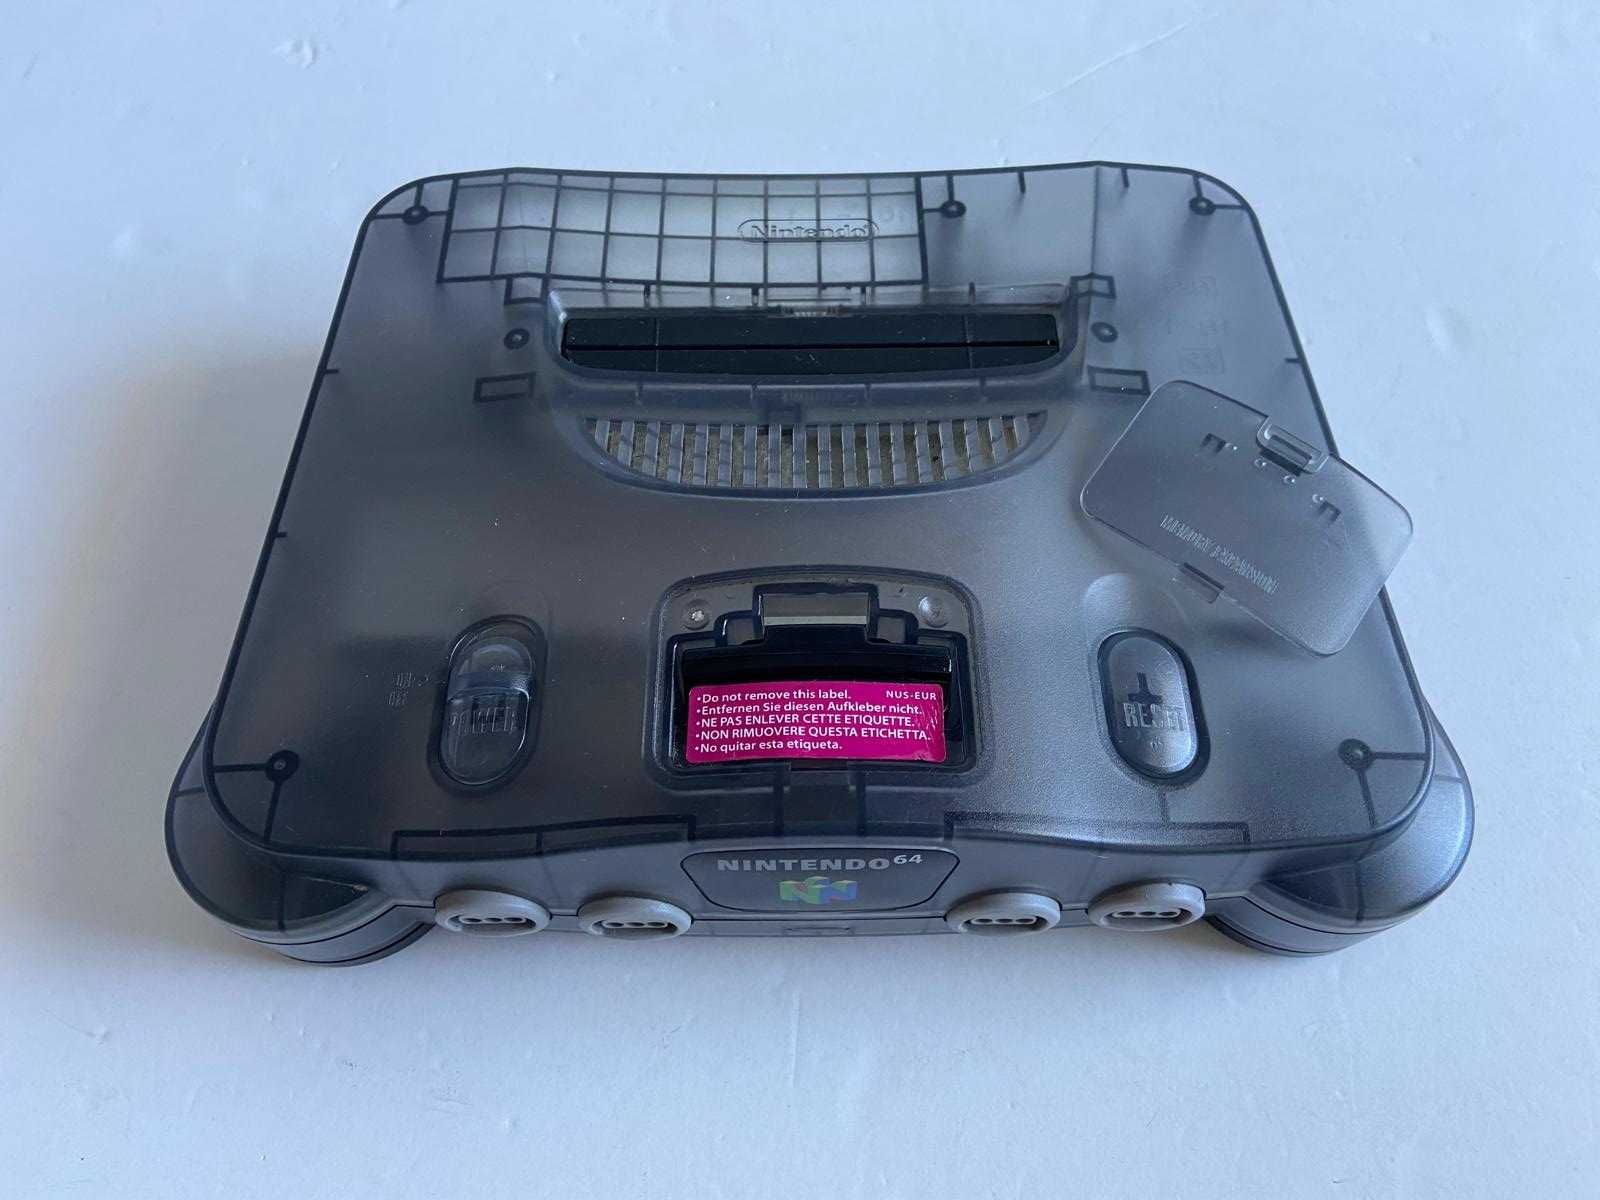 Consola PAL Nintendo 64 Smoke Grey - Funtastic Edition